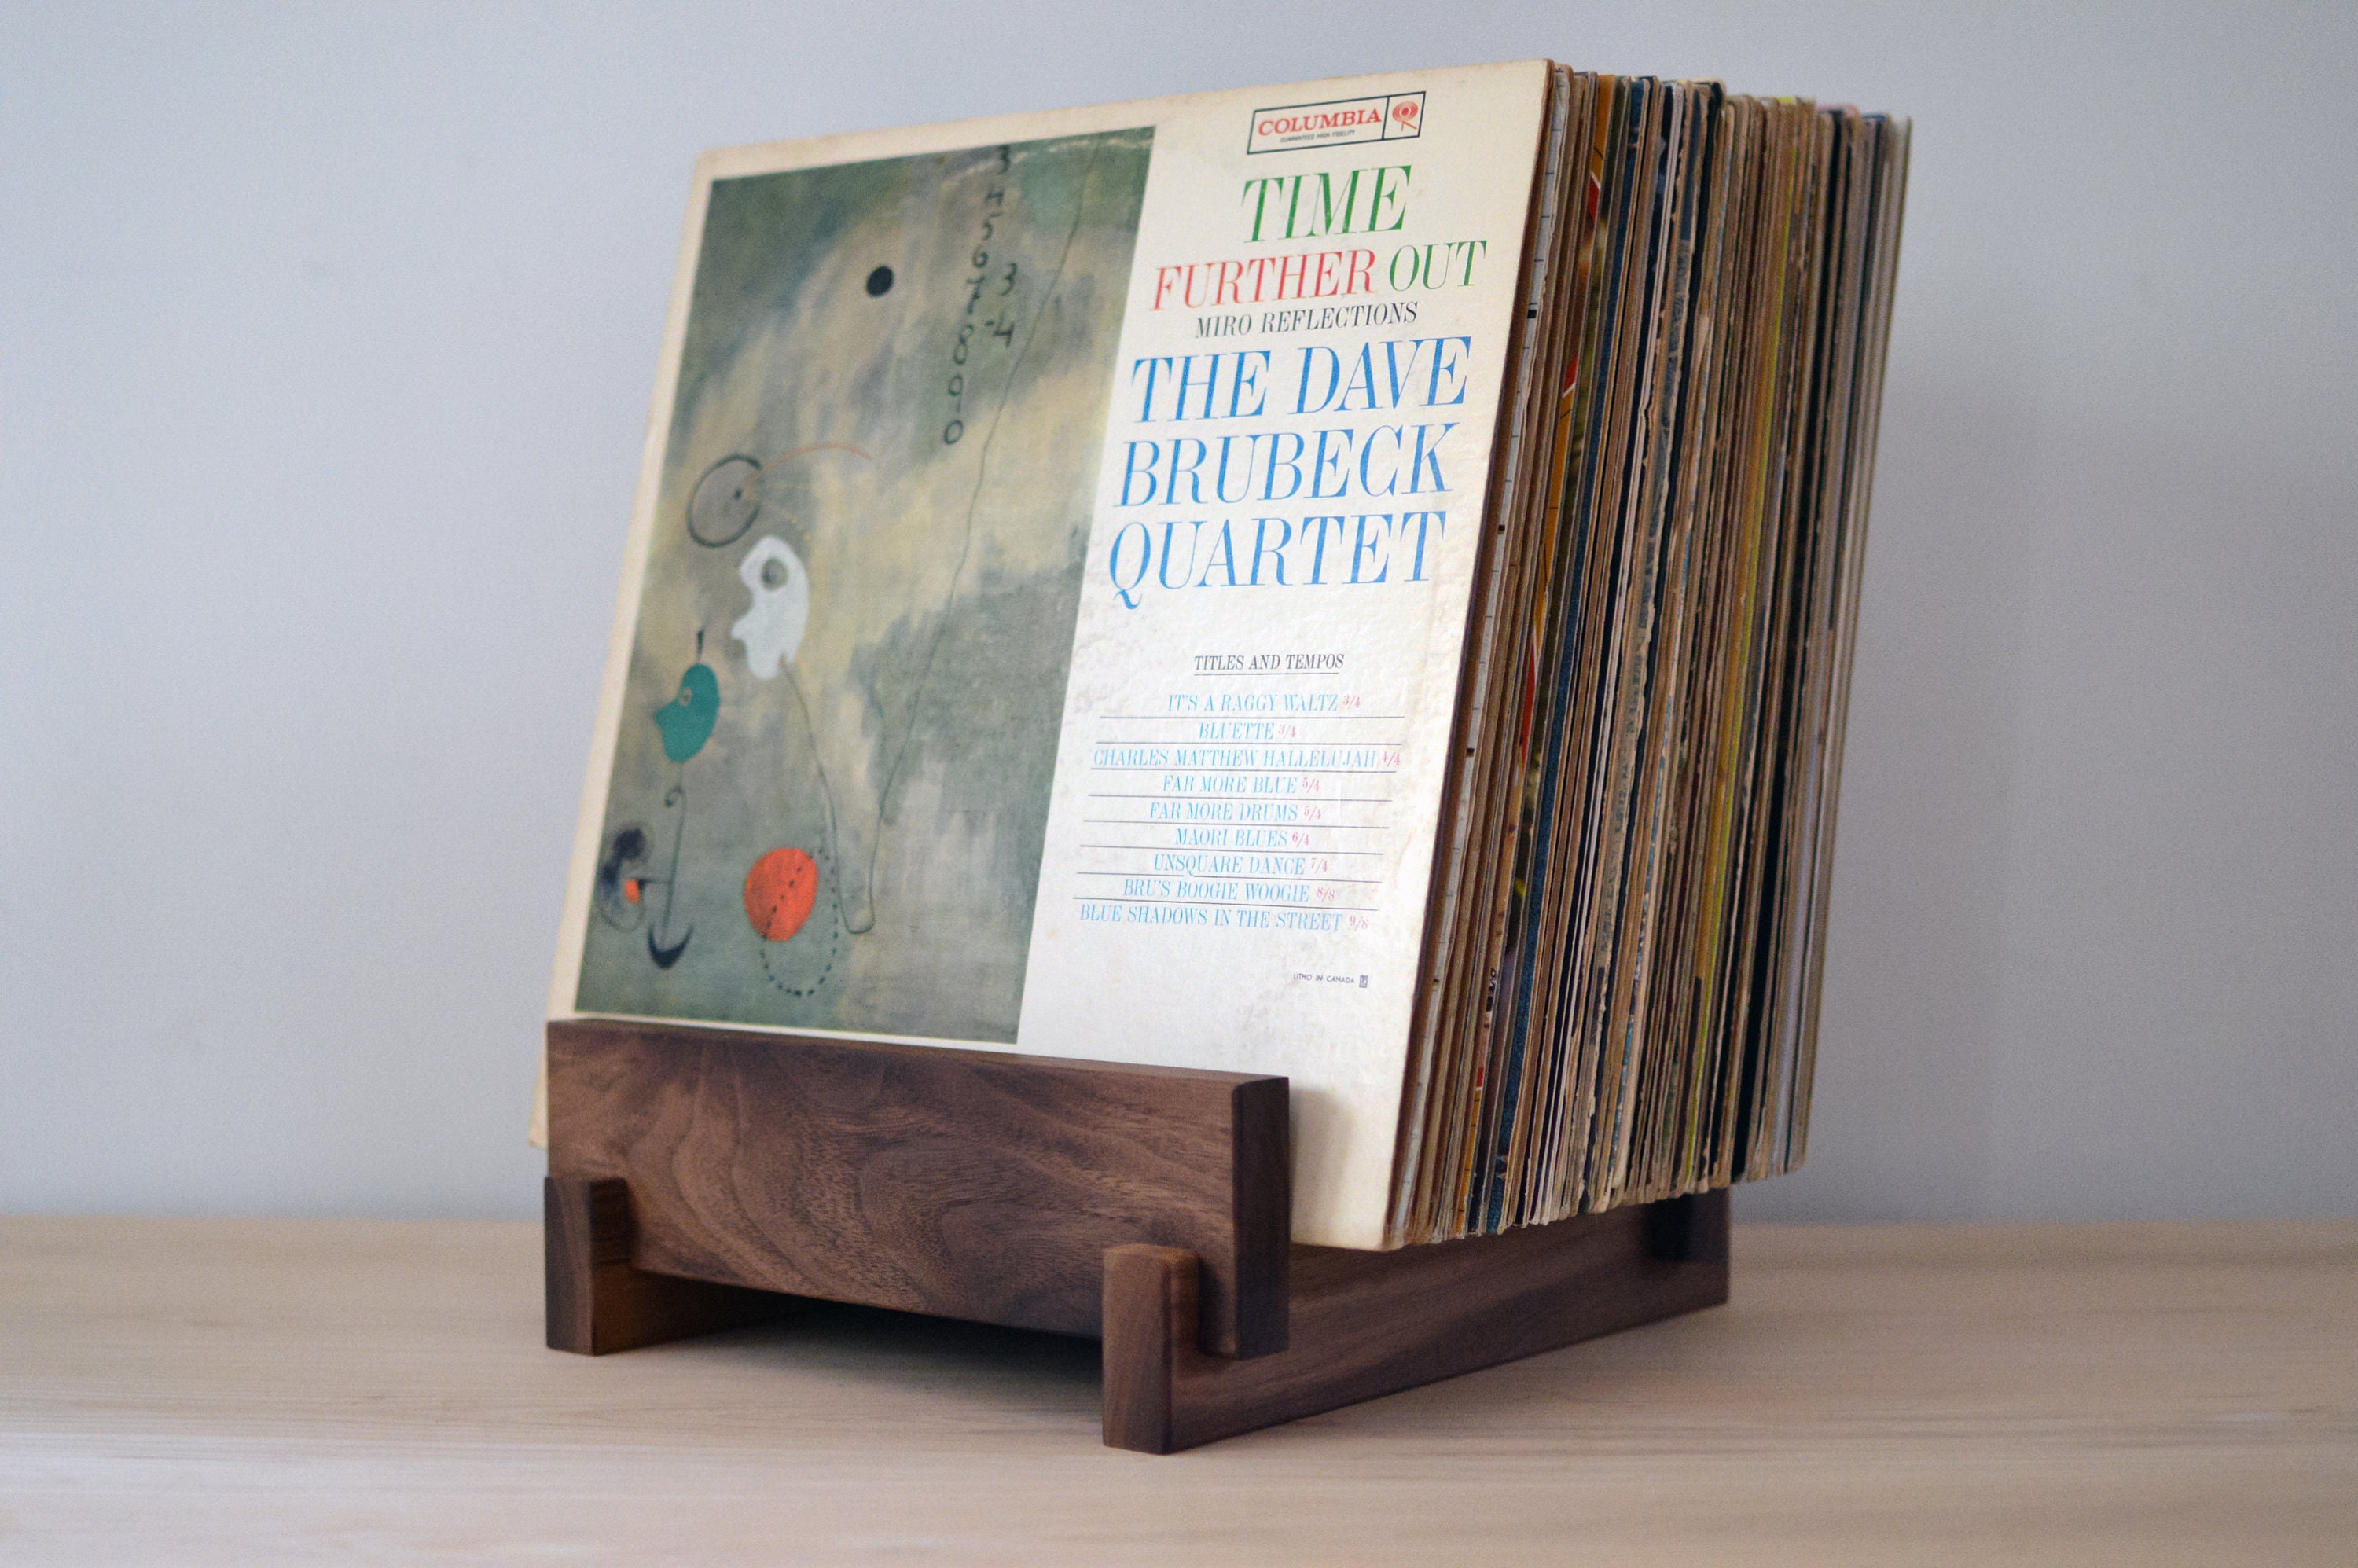 75 LP Vinyl Record Storage Holder, Solid Walnut Wood Record Holder for  Albums, B